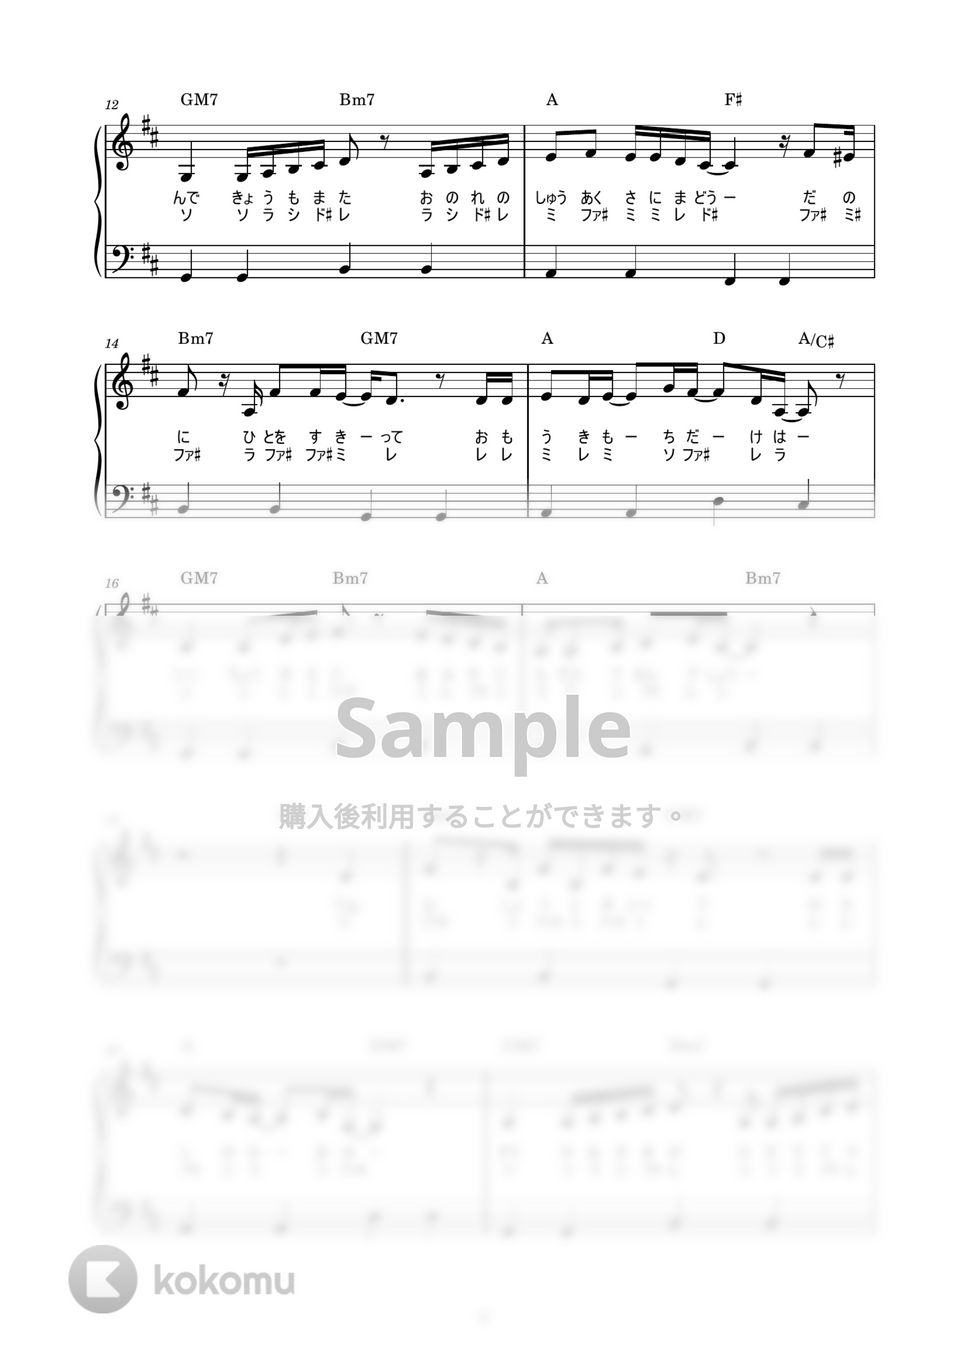 Ado - ギラギラ (かんたん / 歌詞付き / ドレミ付き / 初心者) by piano.tokyo